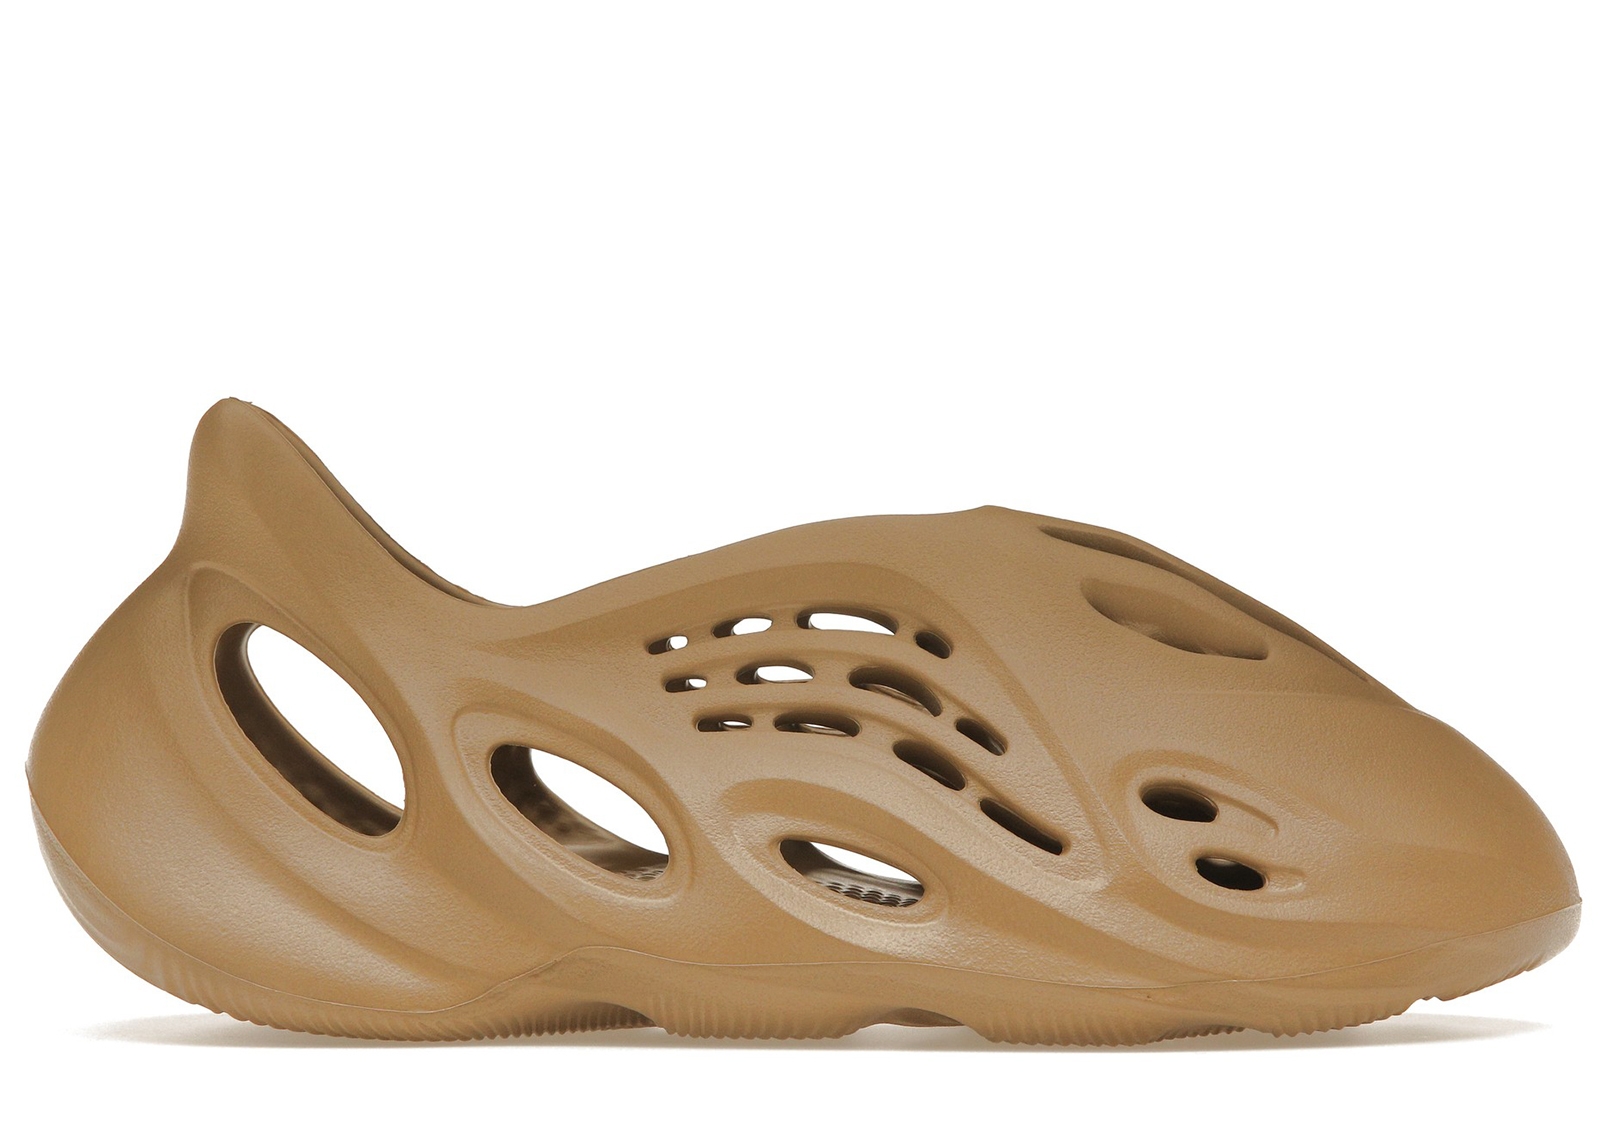 adidas YEEZY Foam Runner Clay Taupe 29.5